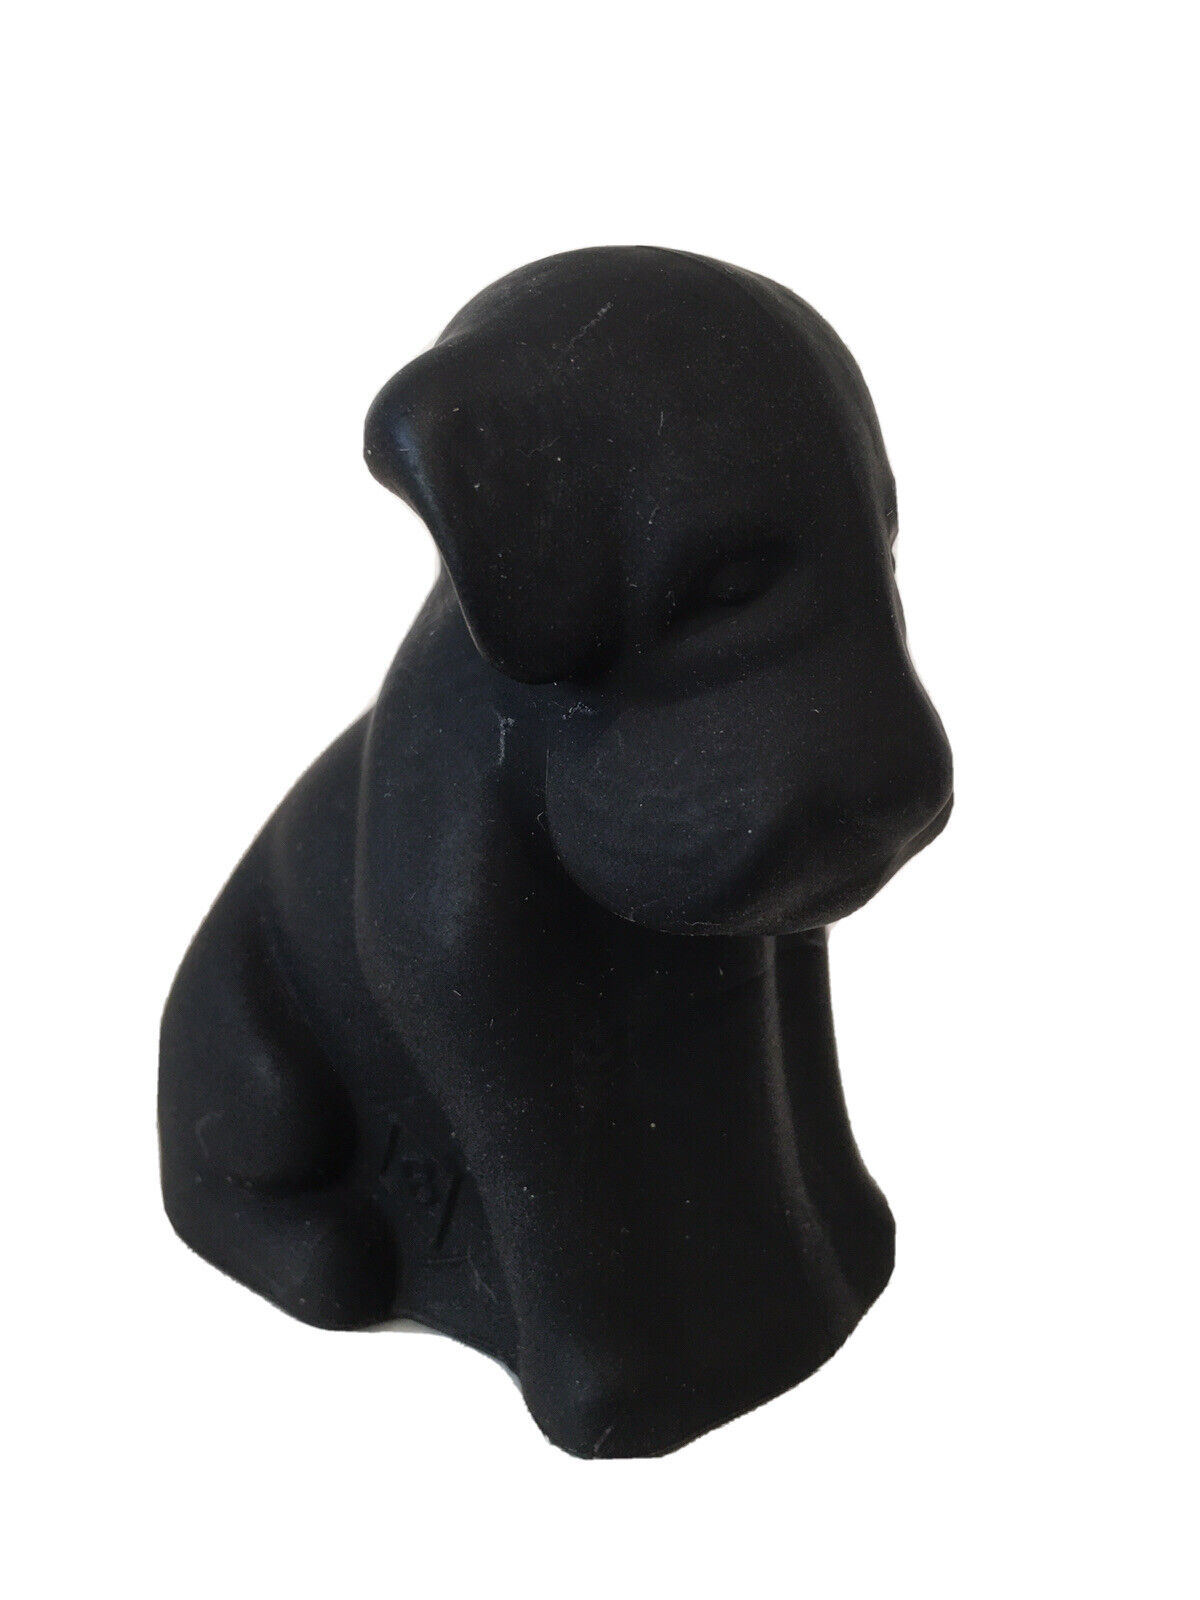 Boyd Art Glass’s Vtg Dog Figurine, Pooche #95 In Classic Black Satin, Signed